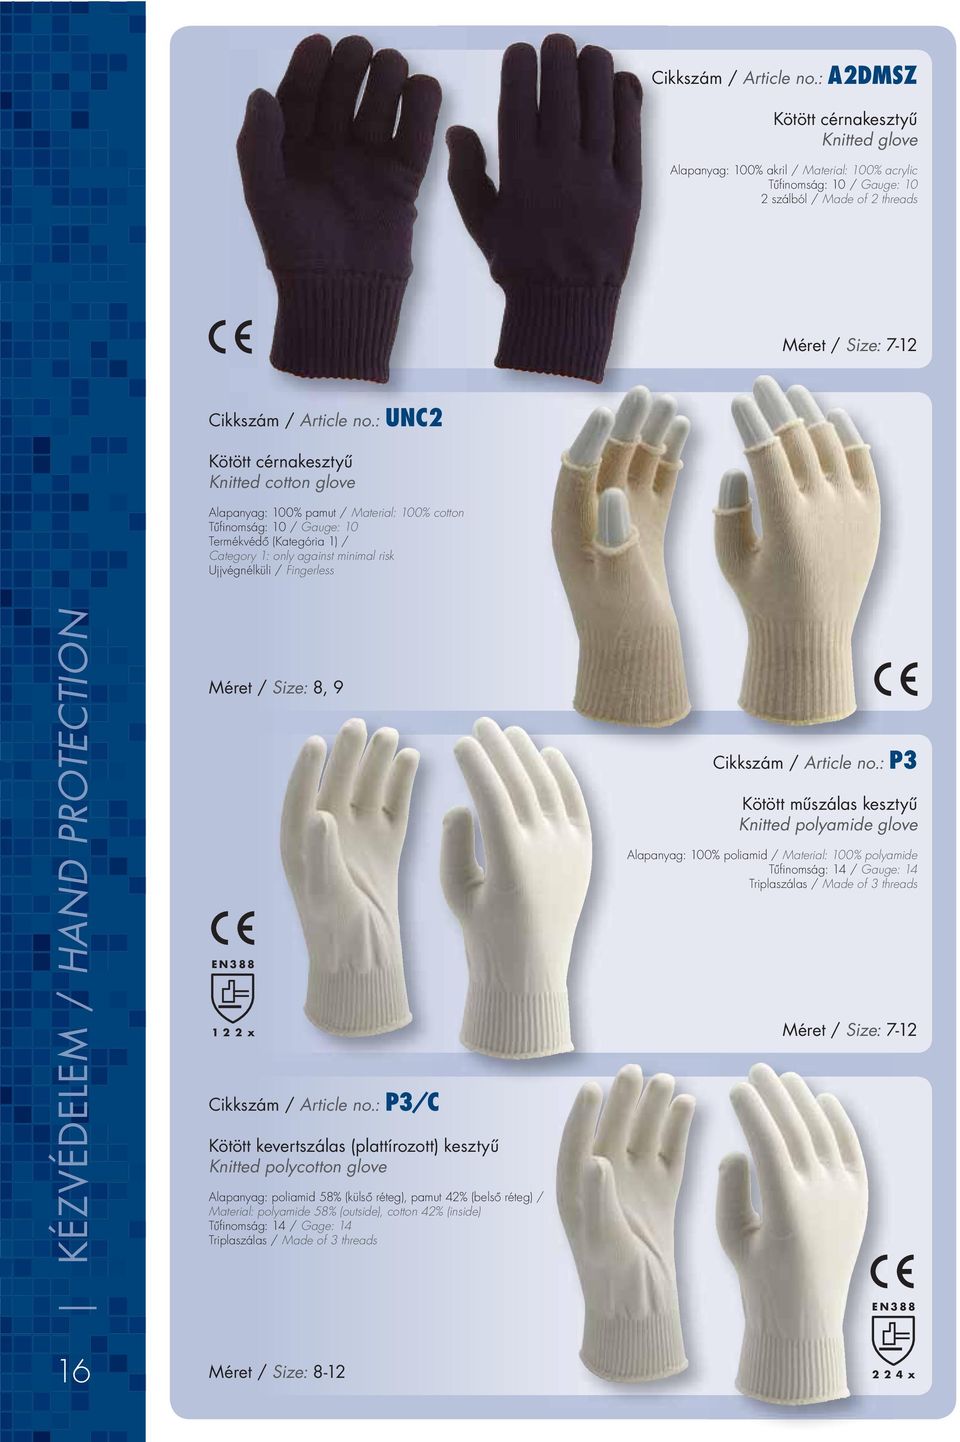 Knitted cotton glove Alapanyag: 100% pamut / Material: 100% cotton Tûfi nomság: 10 / Gauge: 10 Termékvédô (Kategória 1) / Category 1: only against minimal risk Ujjvégnélküli / Fingerless KÉZVÉDELEM /